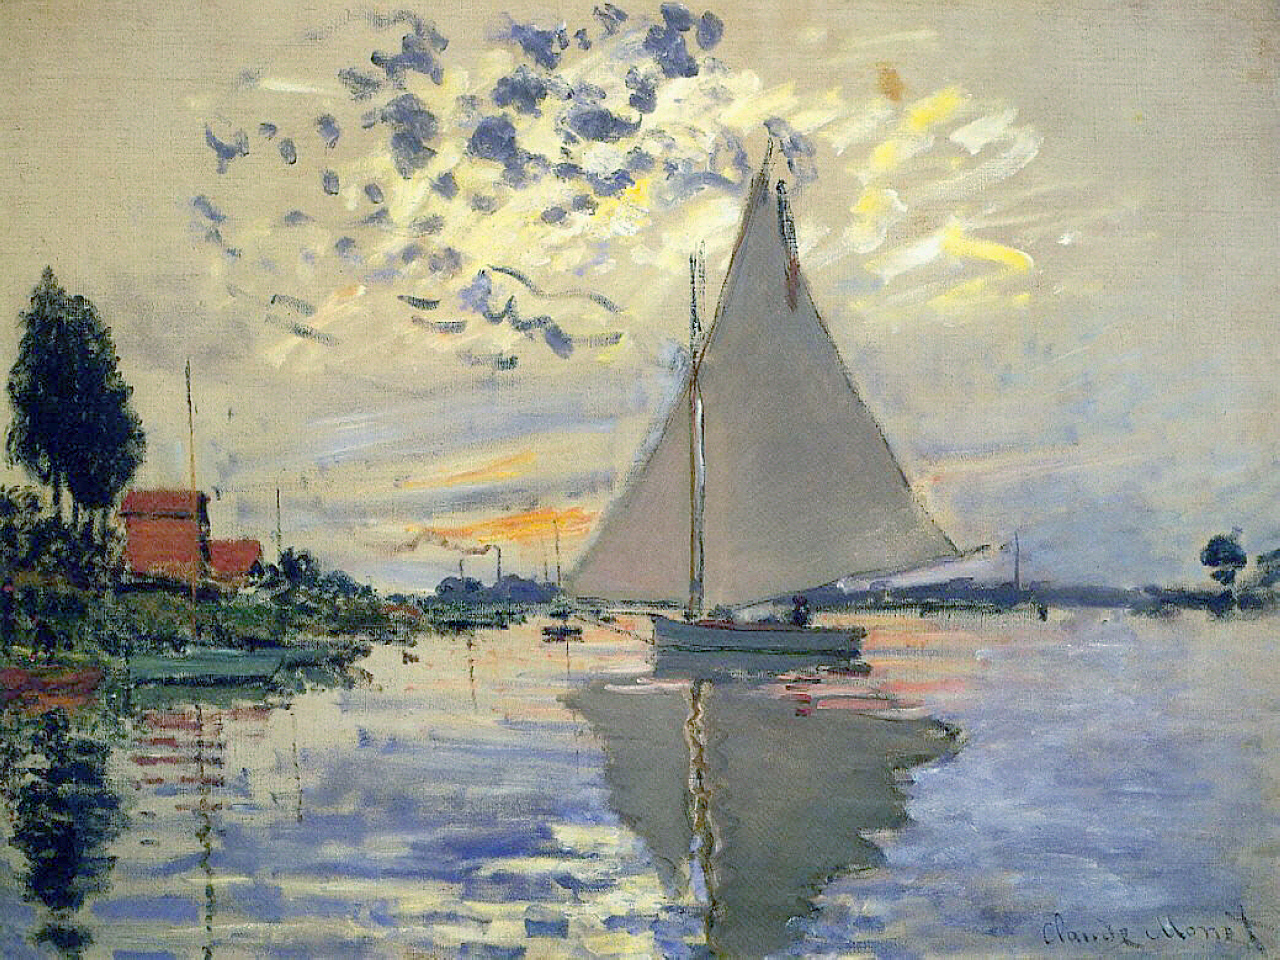 Claude+Monet-1840-1926 (657).jpg